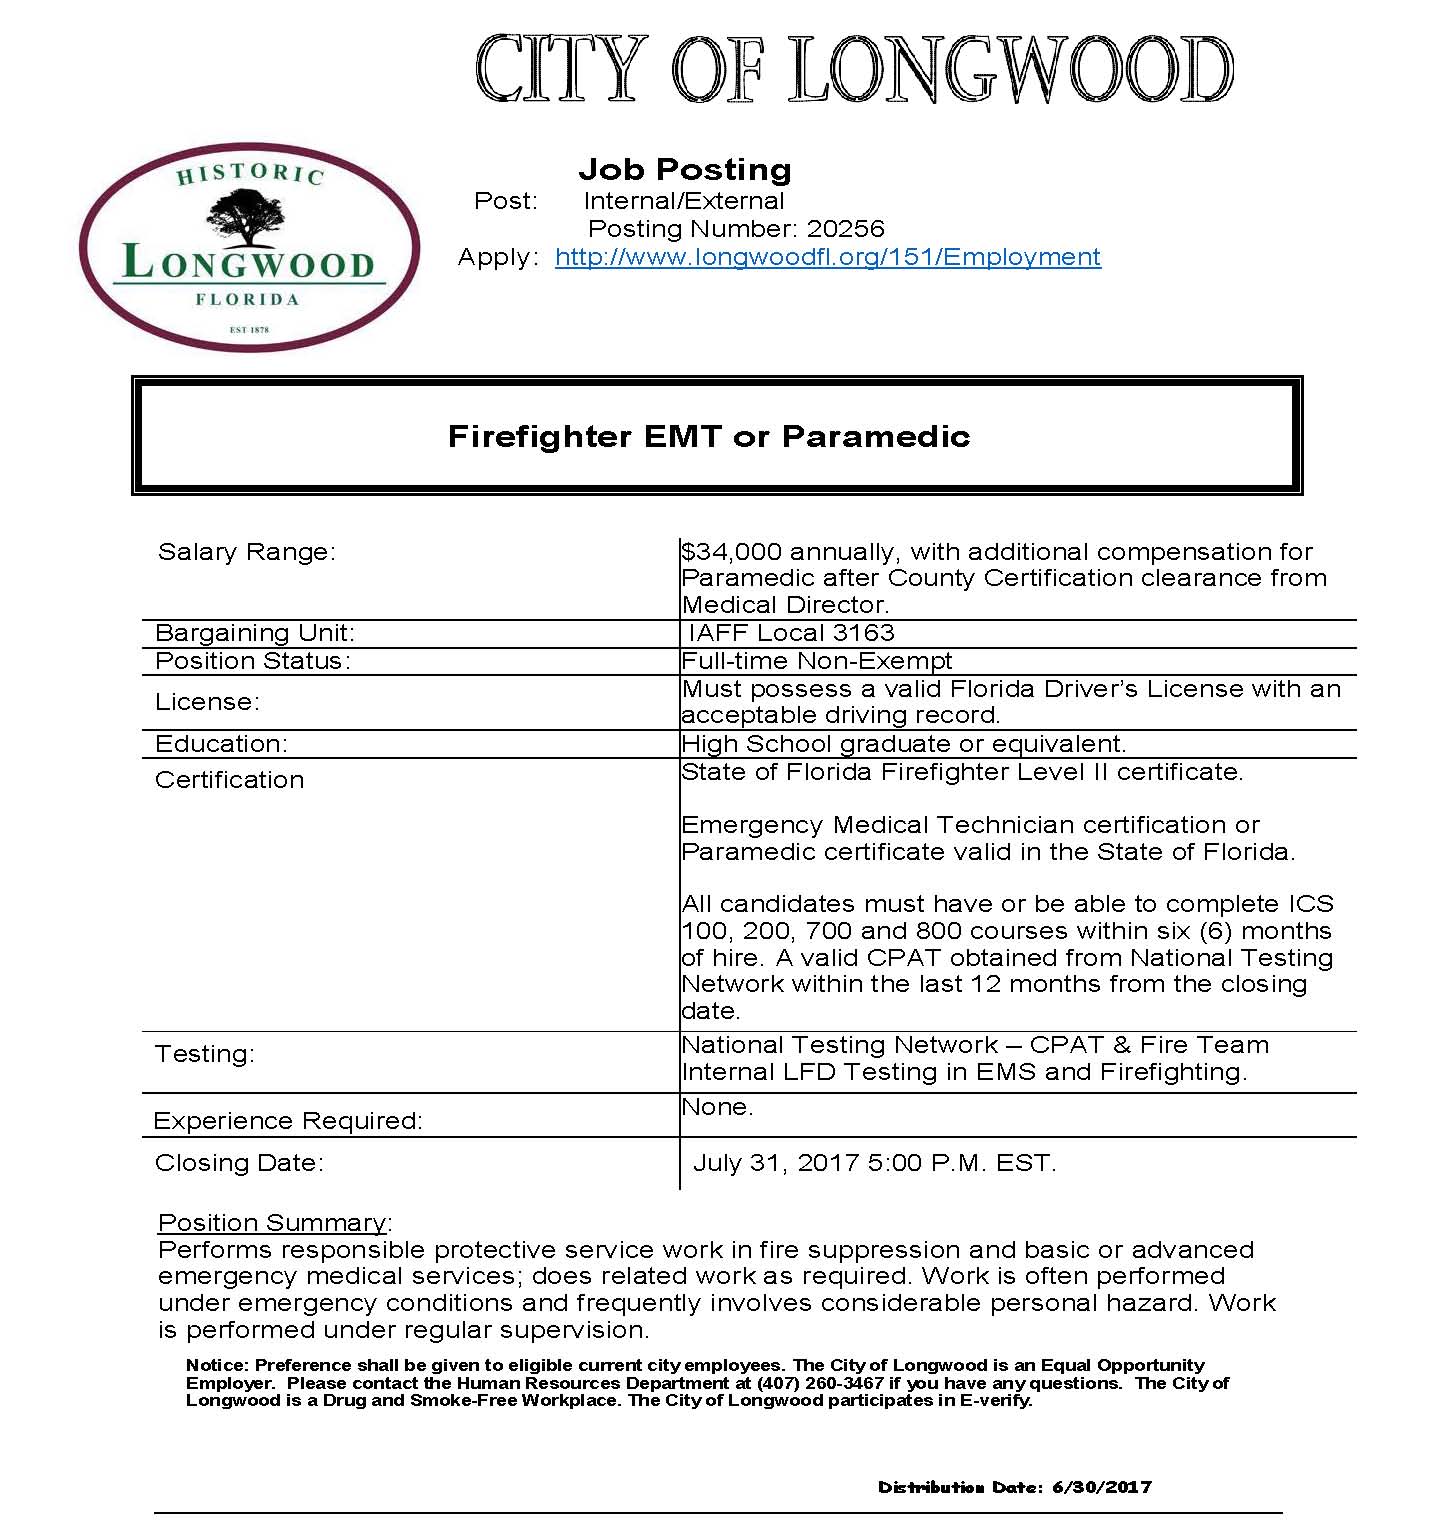 City of Longwood Hiring Firefighter/EMT or Paramedic